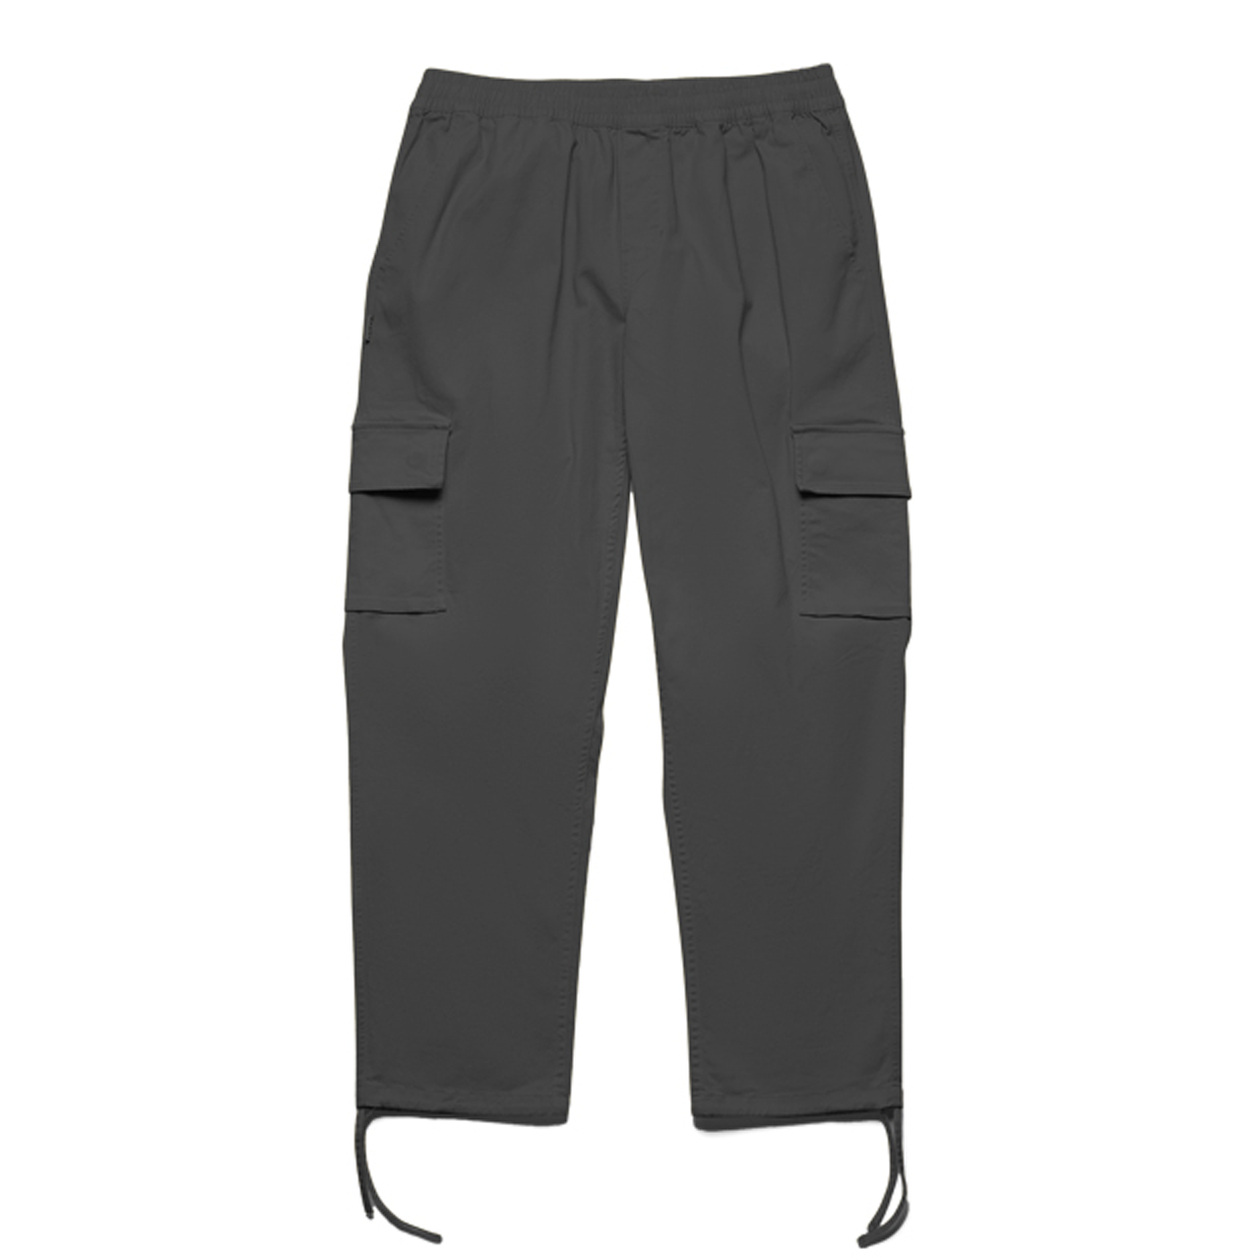 Black Matte Men's Spandex Stretch Pants Men's Black Large